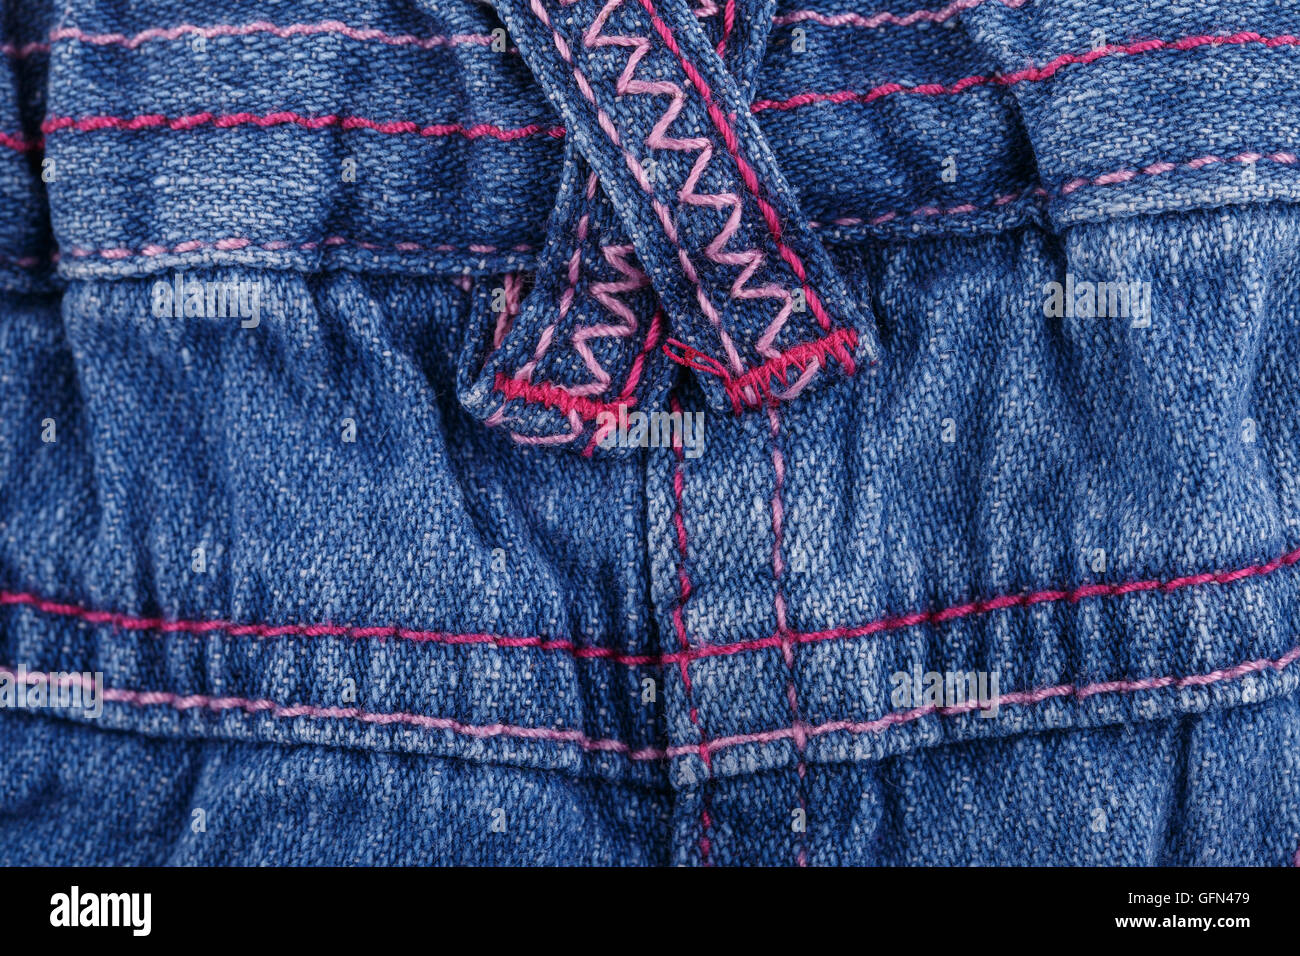 Belt Loop Detail of Light Blue Jeans Stock Photo - Image of apparel, jeans:  144833242